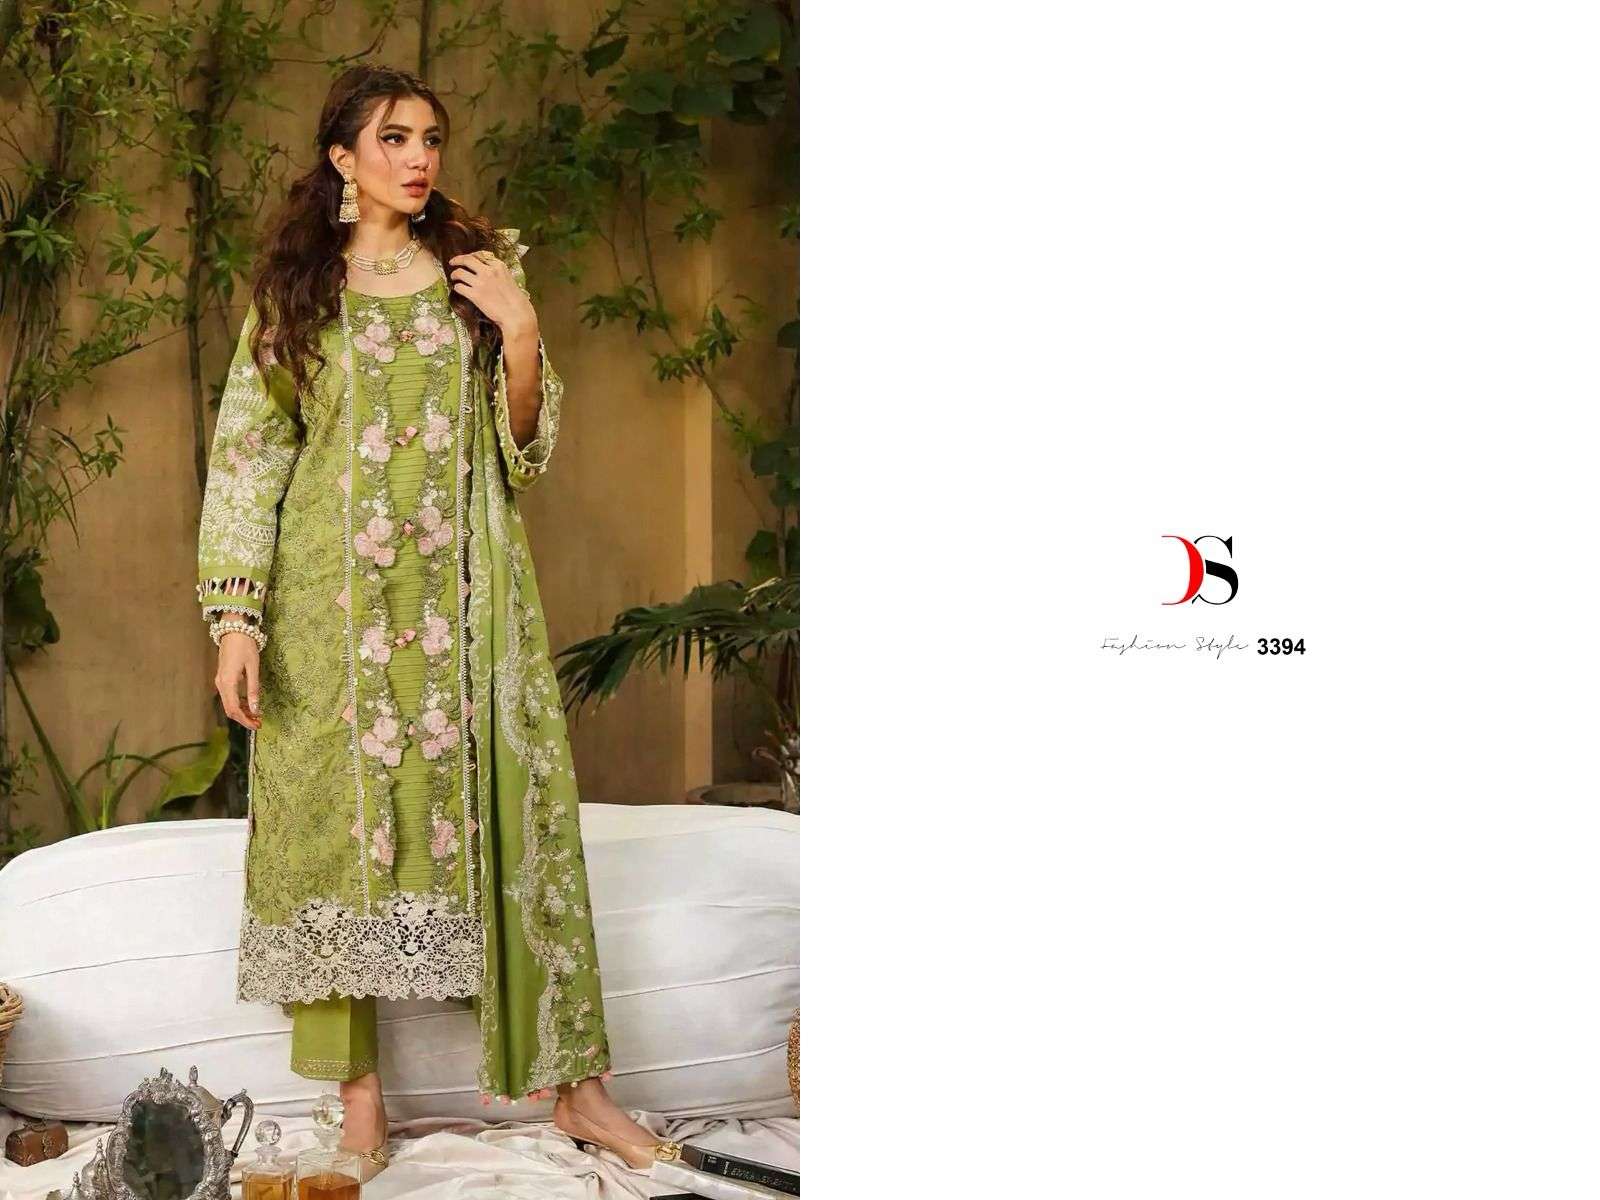 elaf luxury vol-24 deepsy suits 3391-3395 series Designer Pakistani Suit  Wholesaler Surat Gujarat